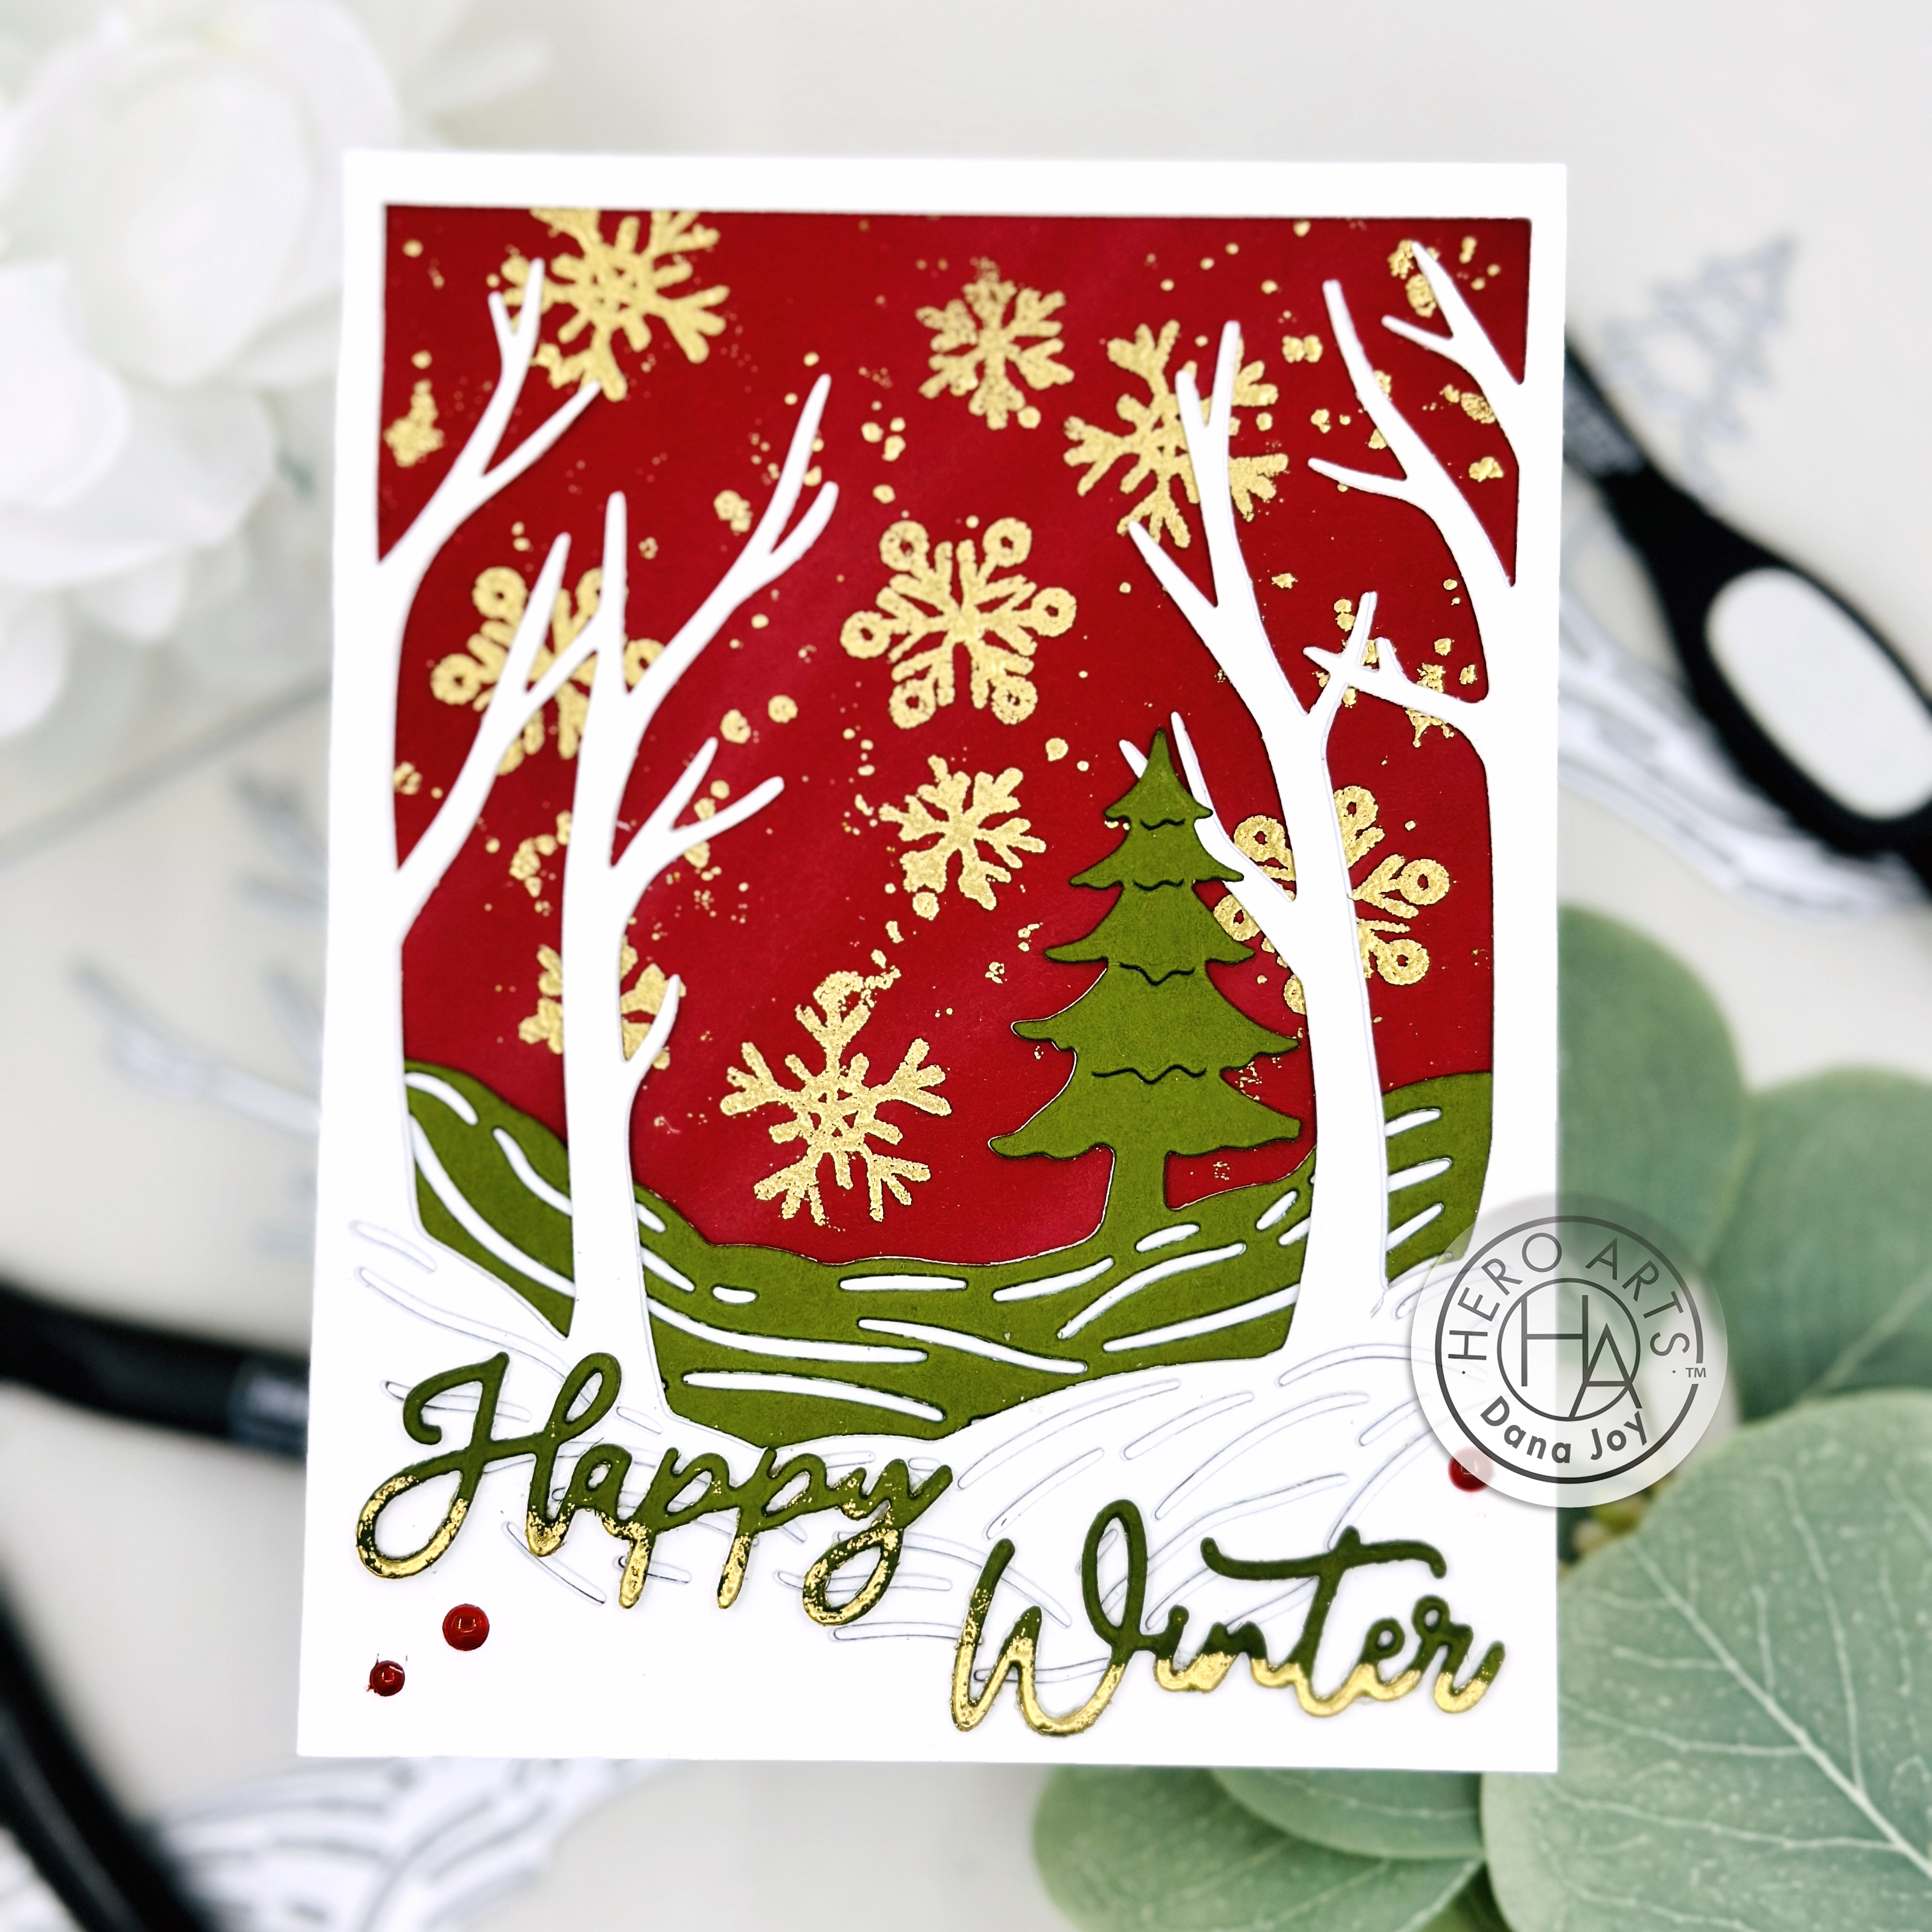 Hero Arts - Color Layering Stencils - O Christmas Tree